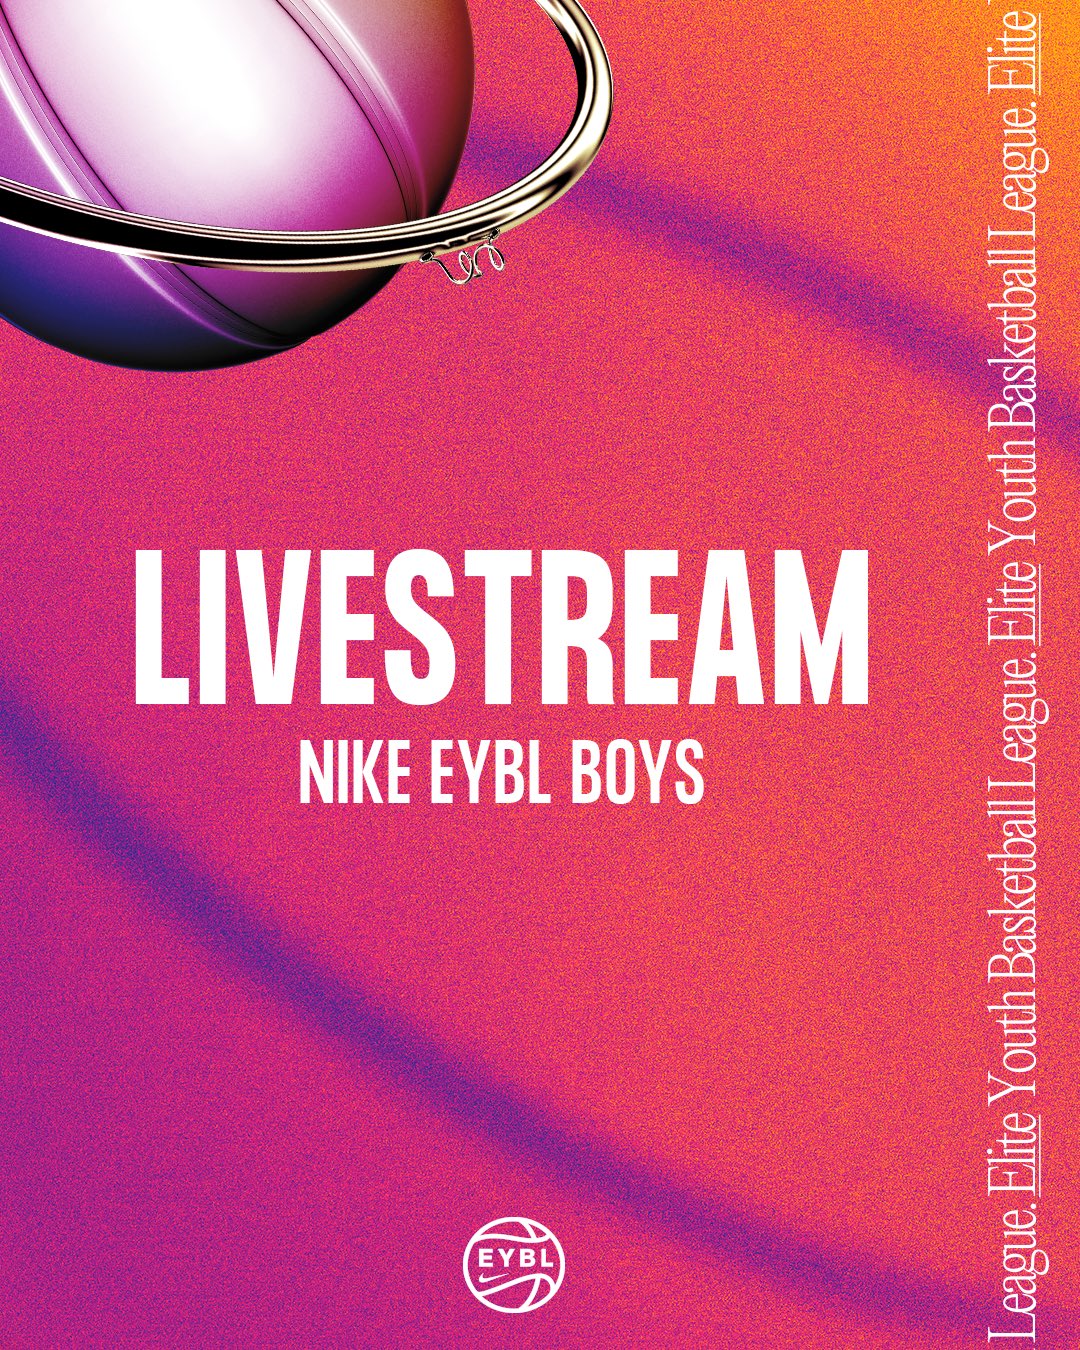 nike eybl live stream